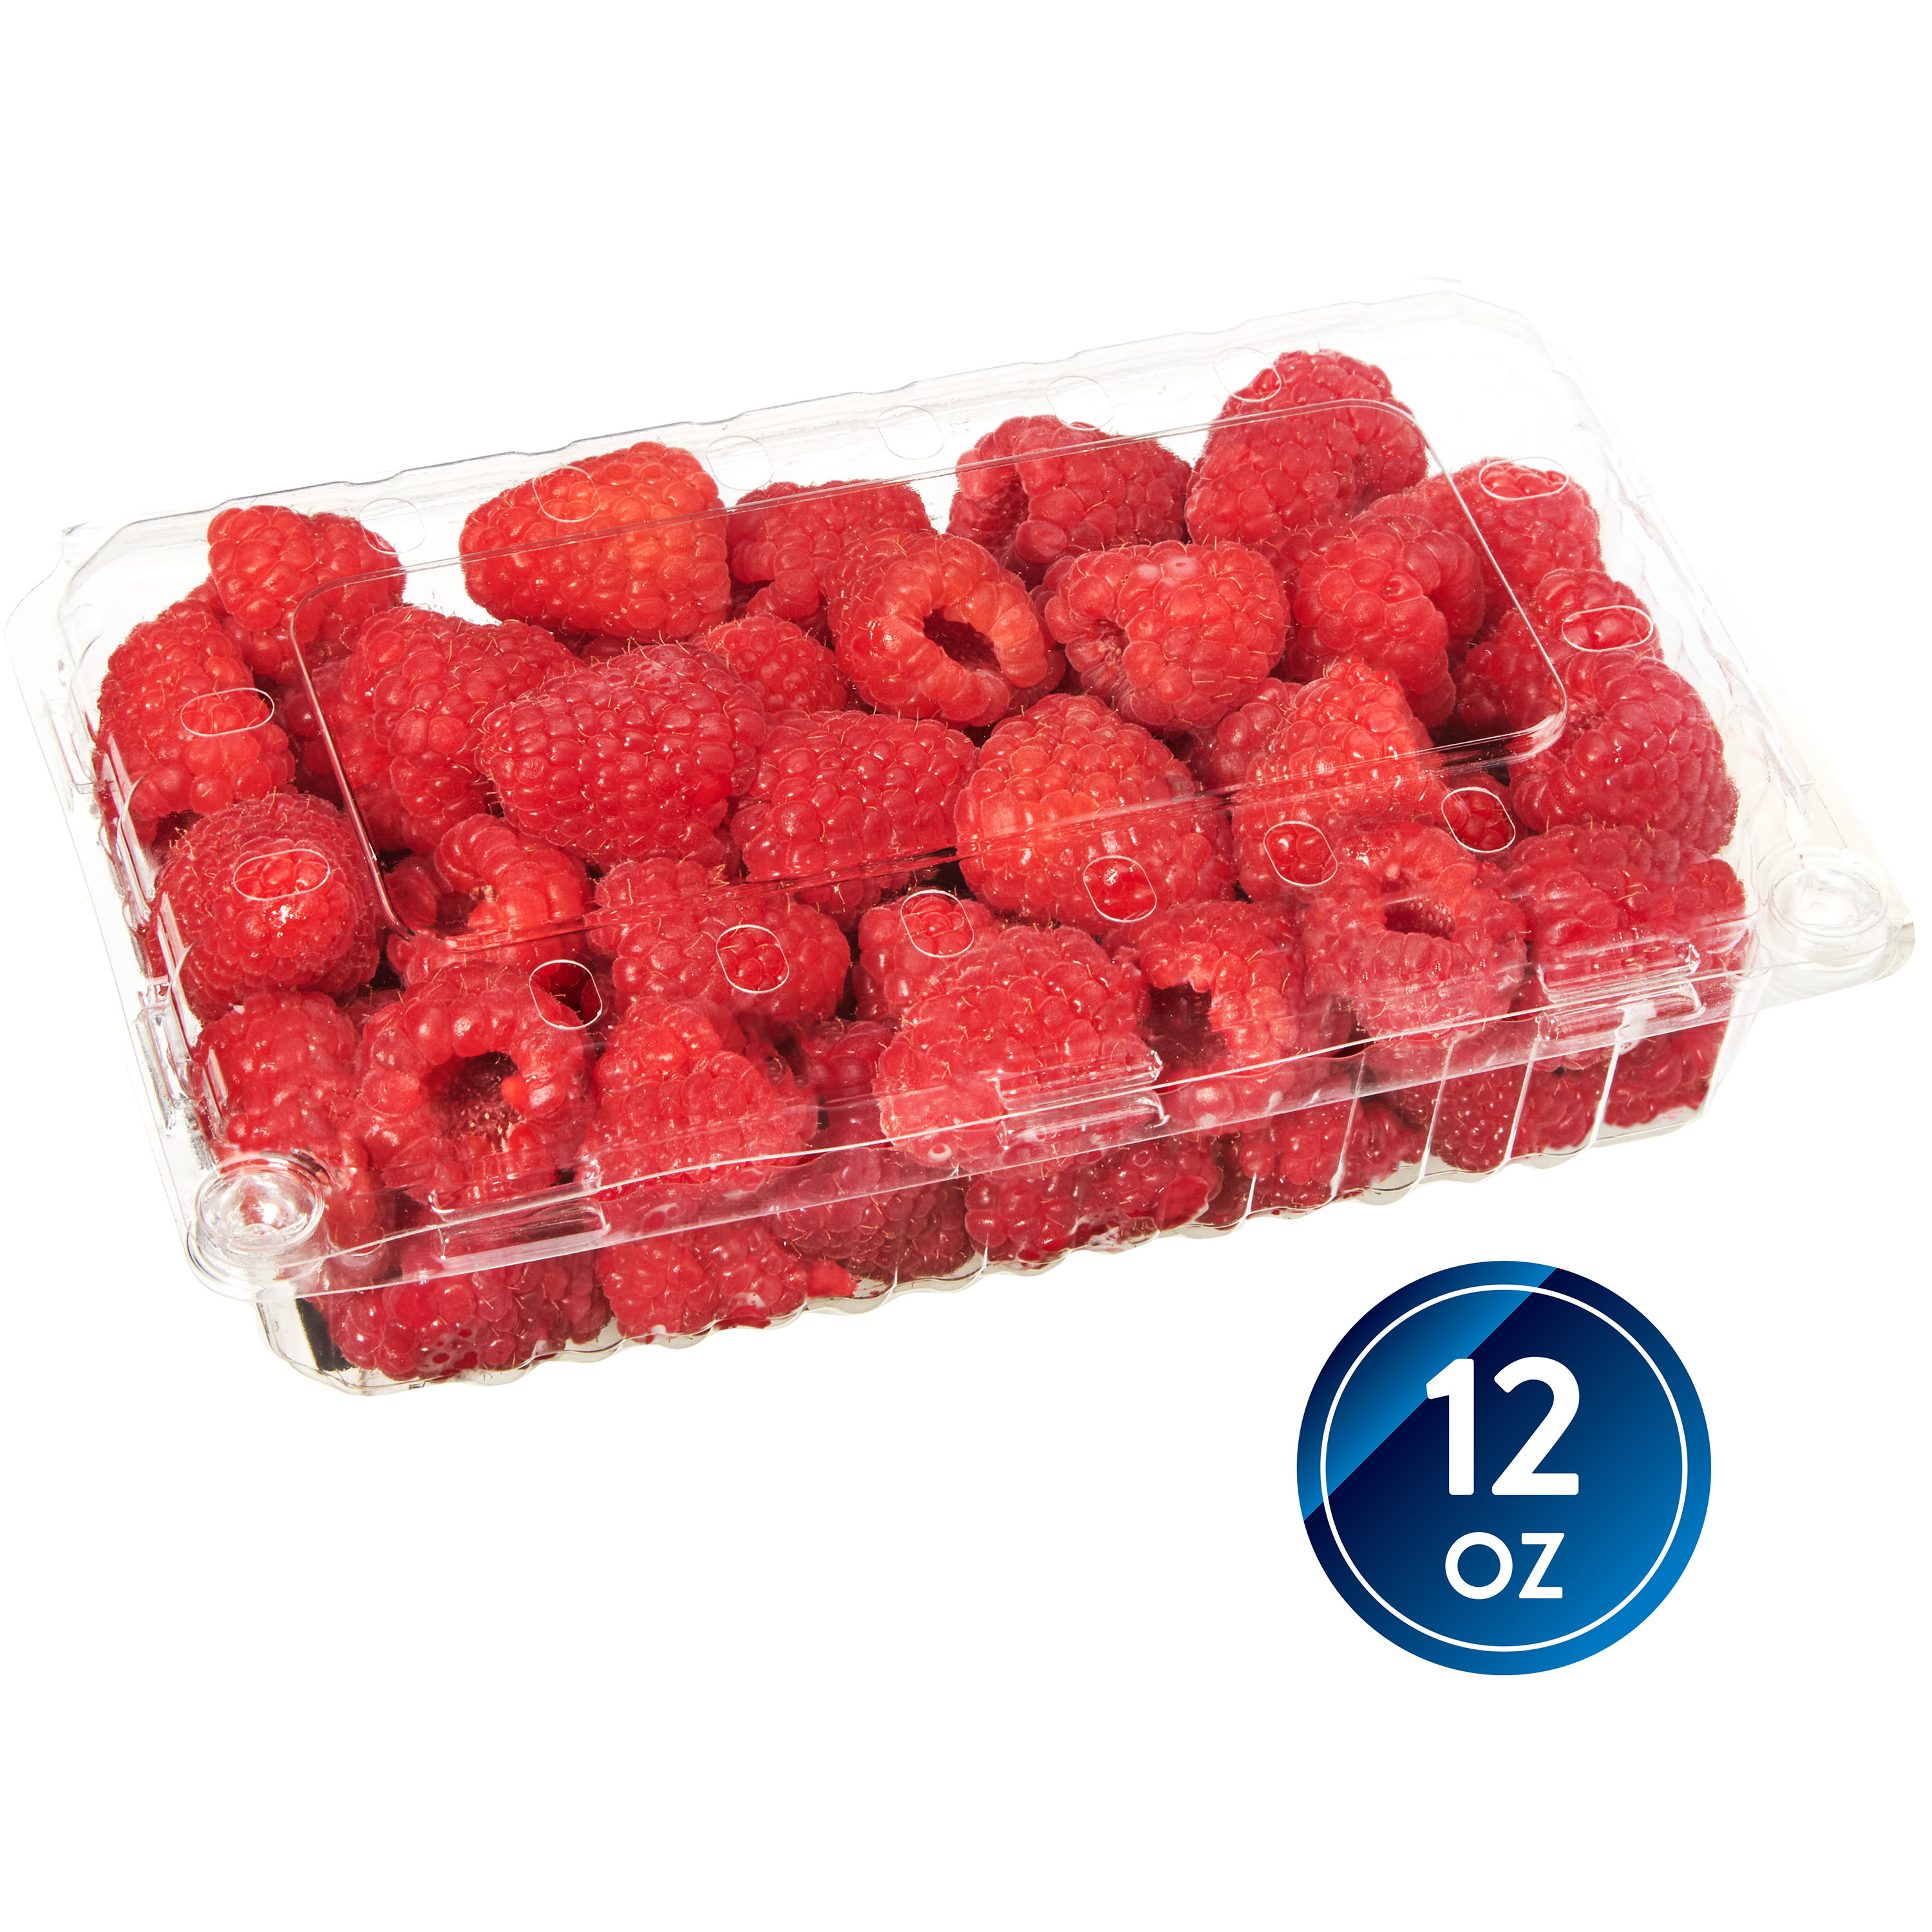 Fresh Raspberries, 12 oz Container - image 1 of 8